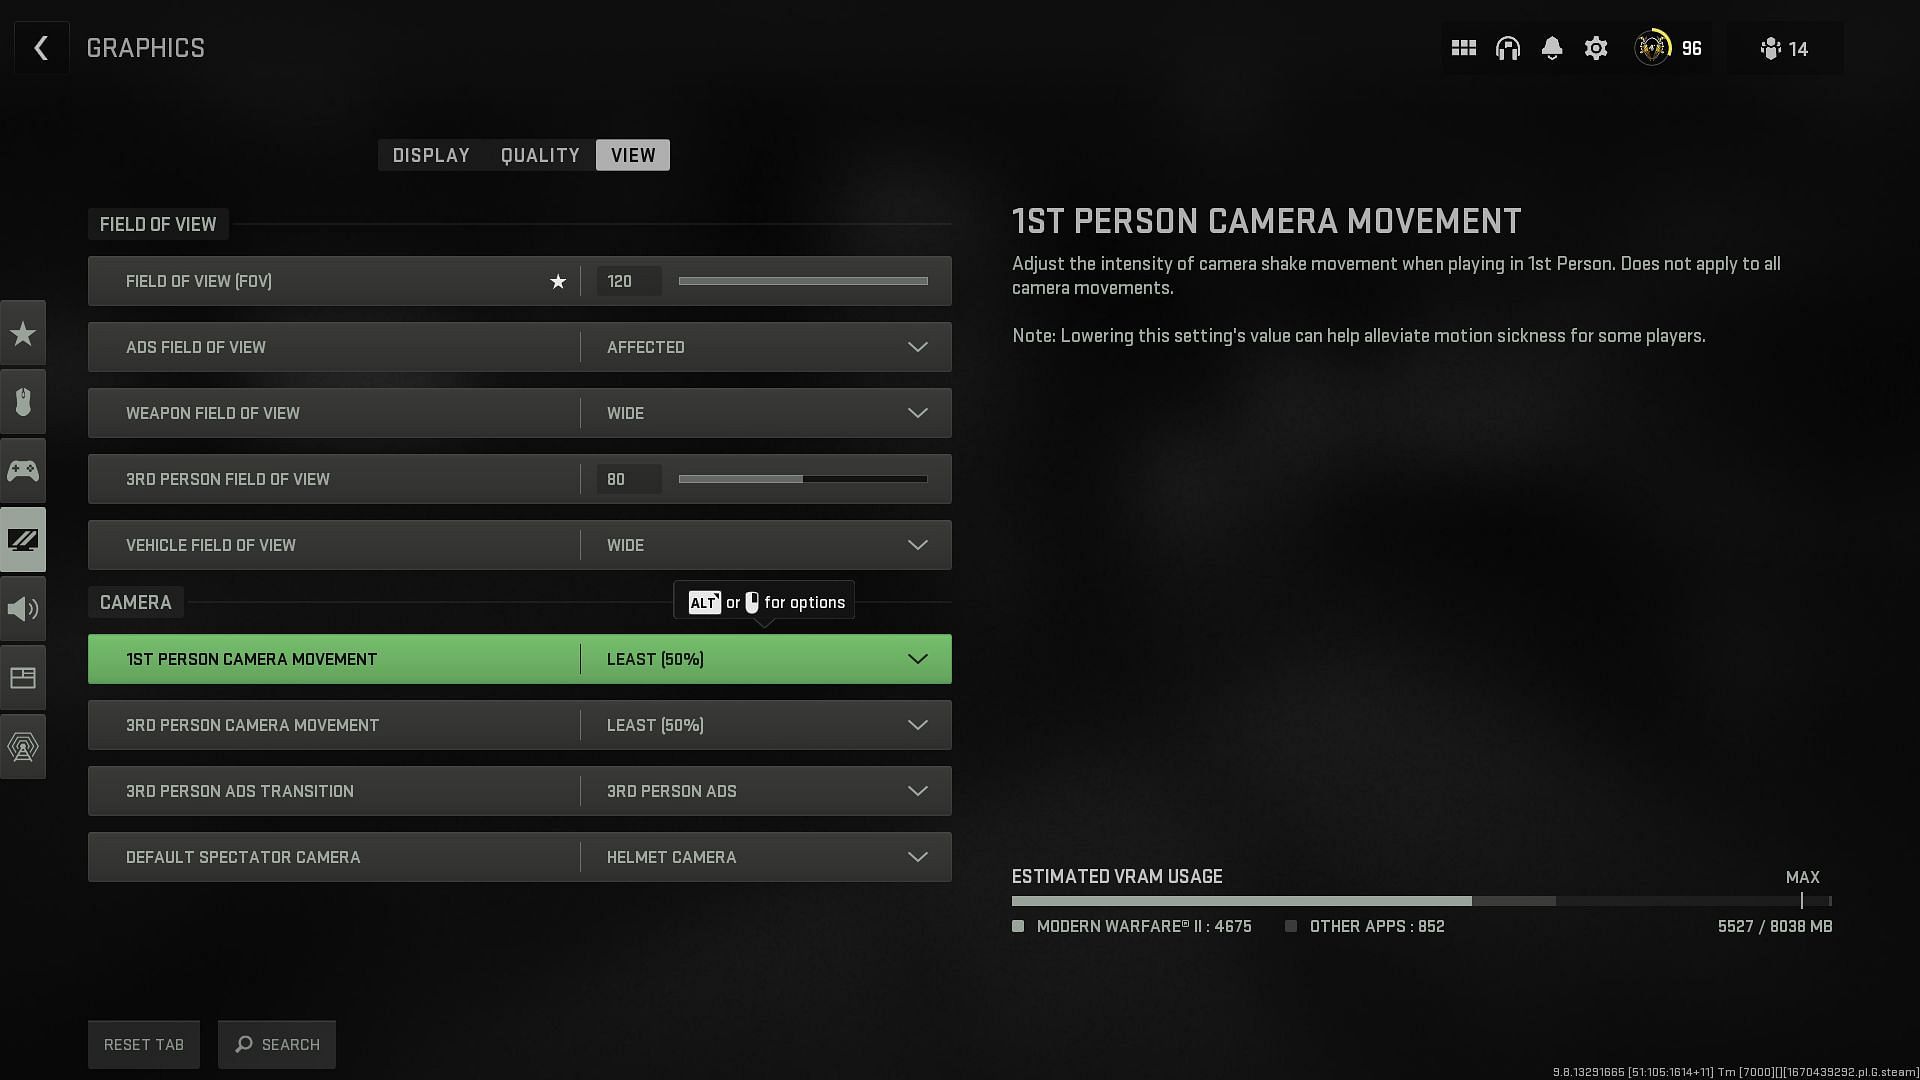 Reducing camera movement (Image via Activision)